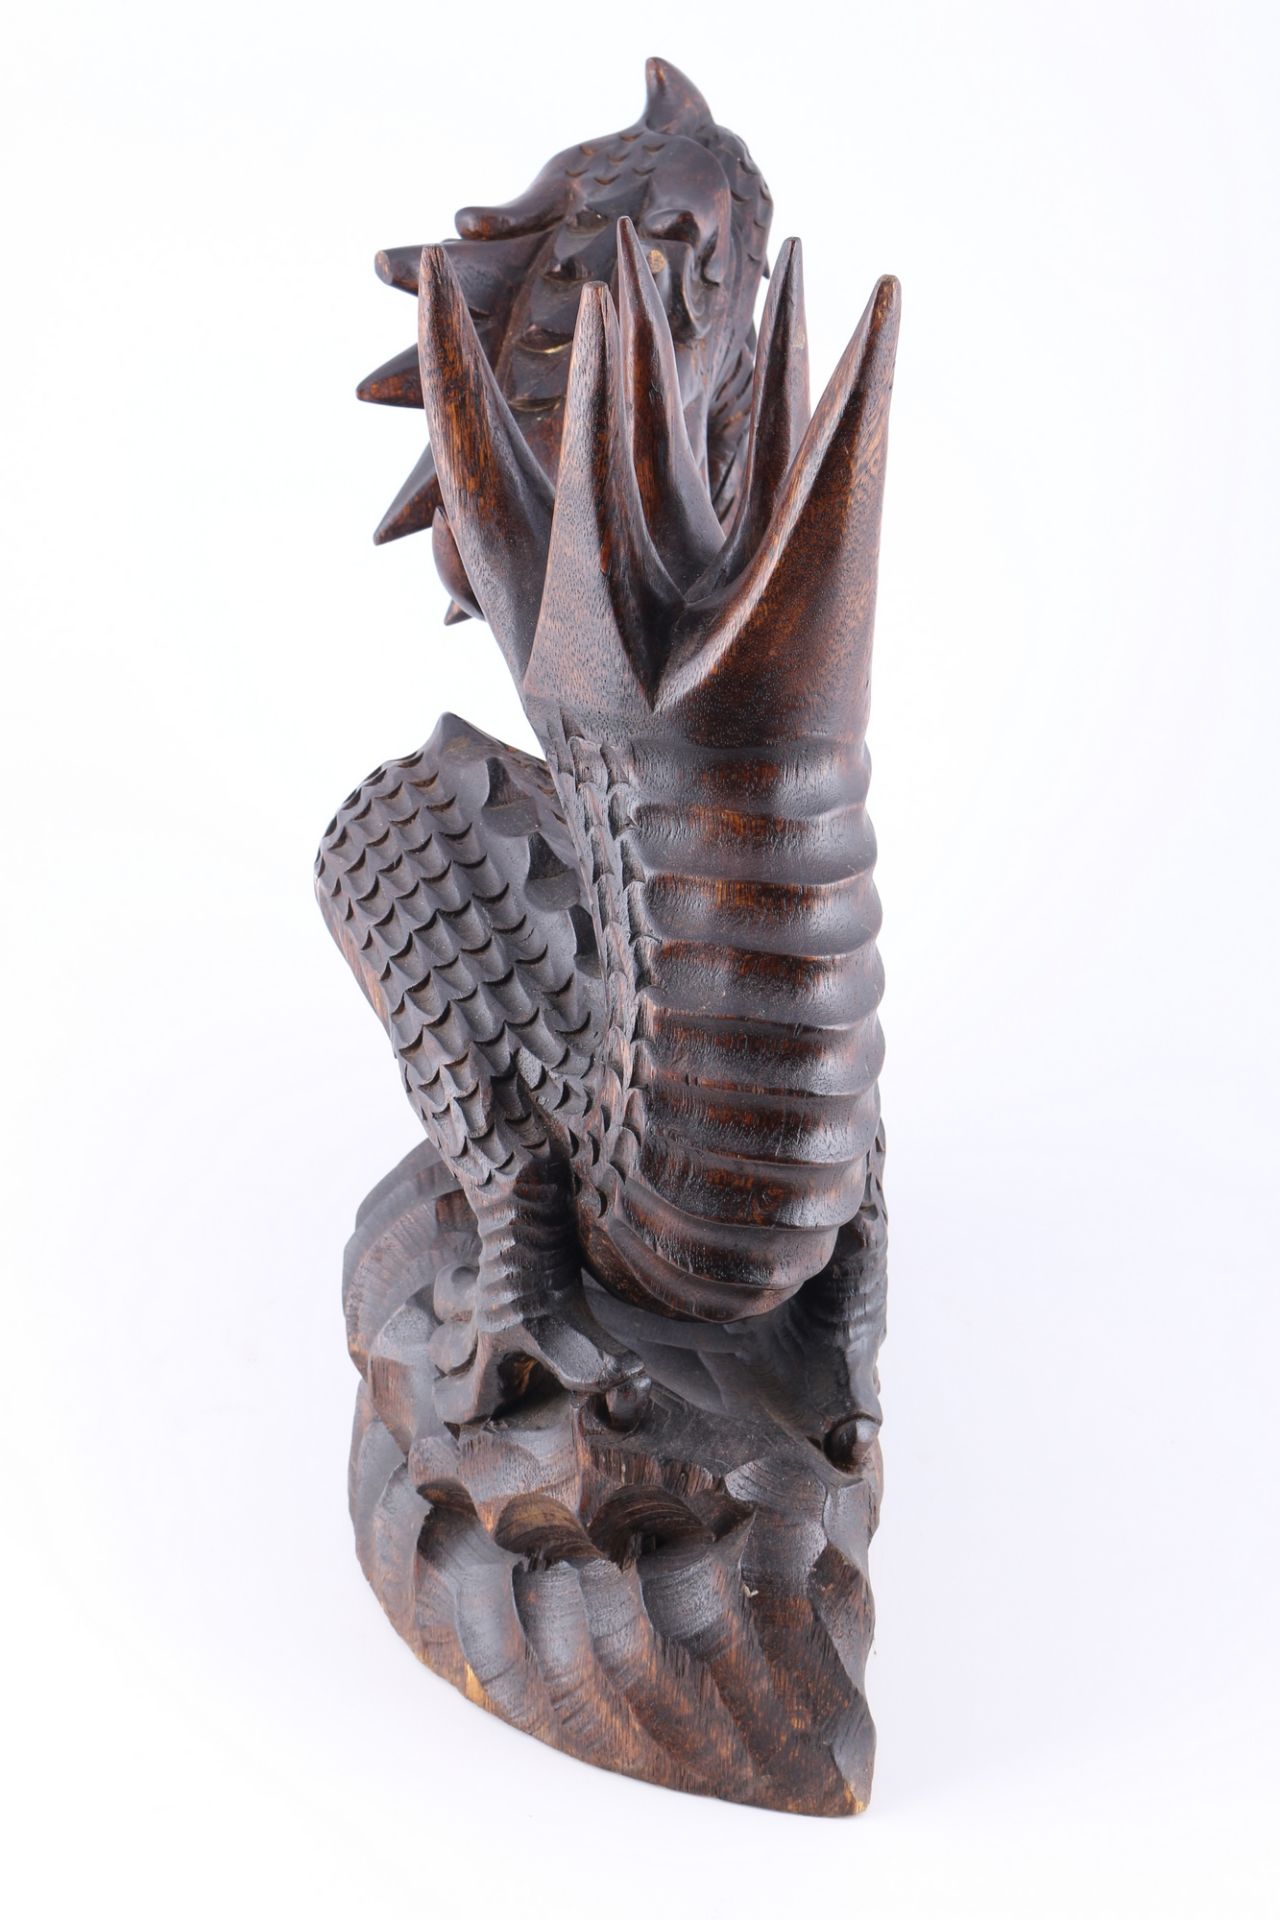 Großer chinesischer Drache, Holzfigur, chinese wooden dragon, - Image 4 of 6